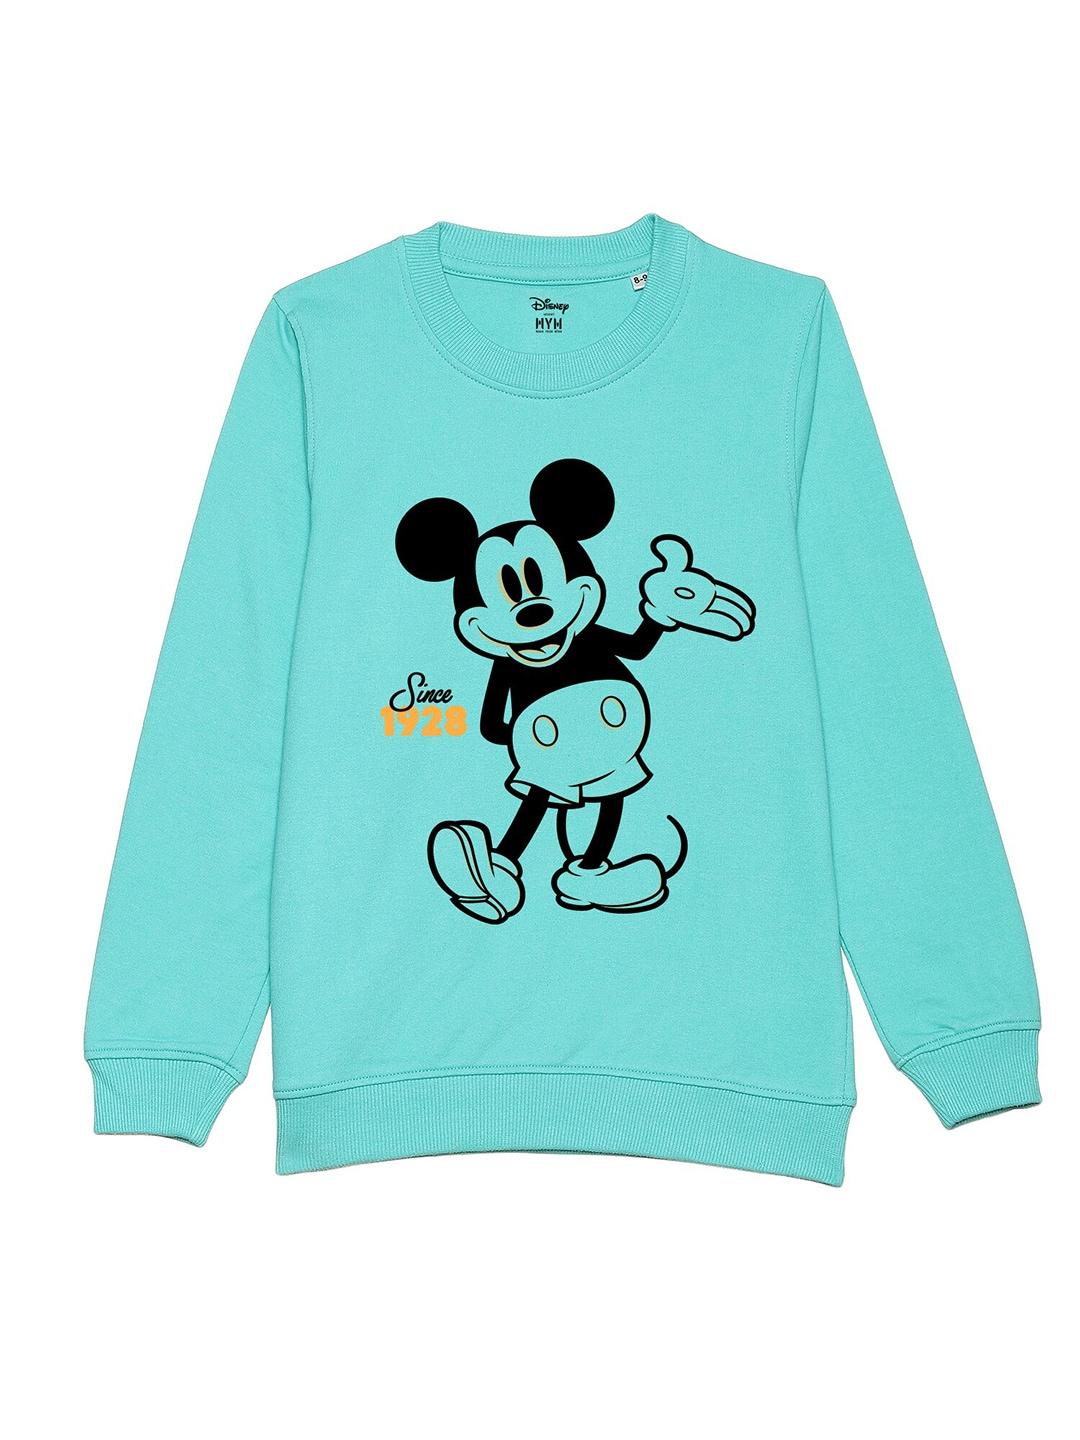 Disney by Wear Your Mind Boys Turquoise Blue Printed Sweatshirt